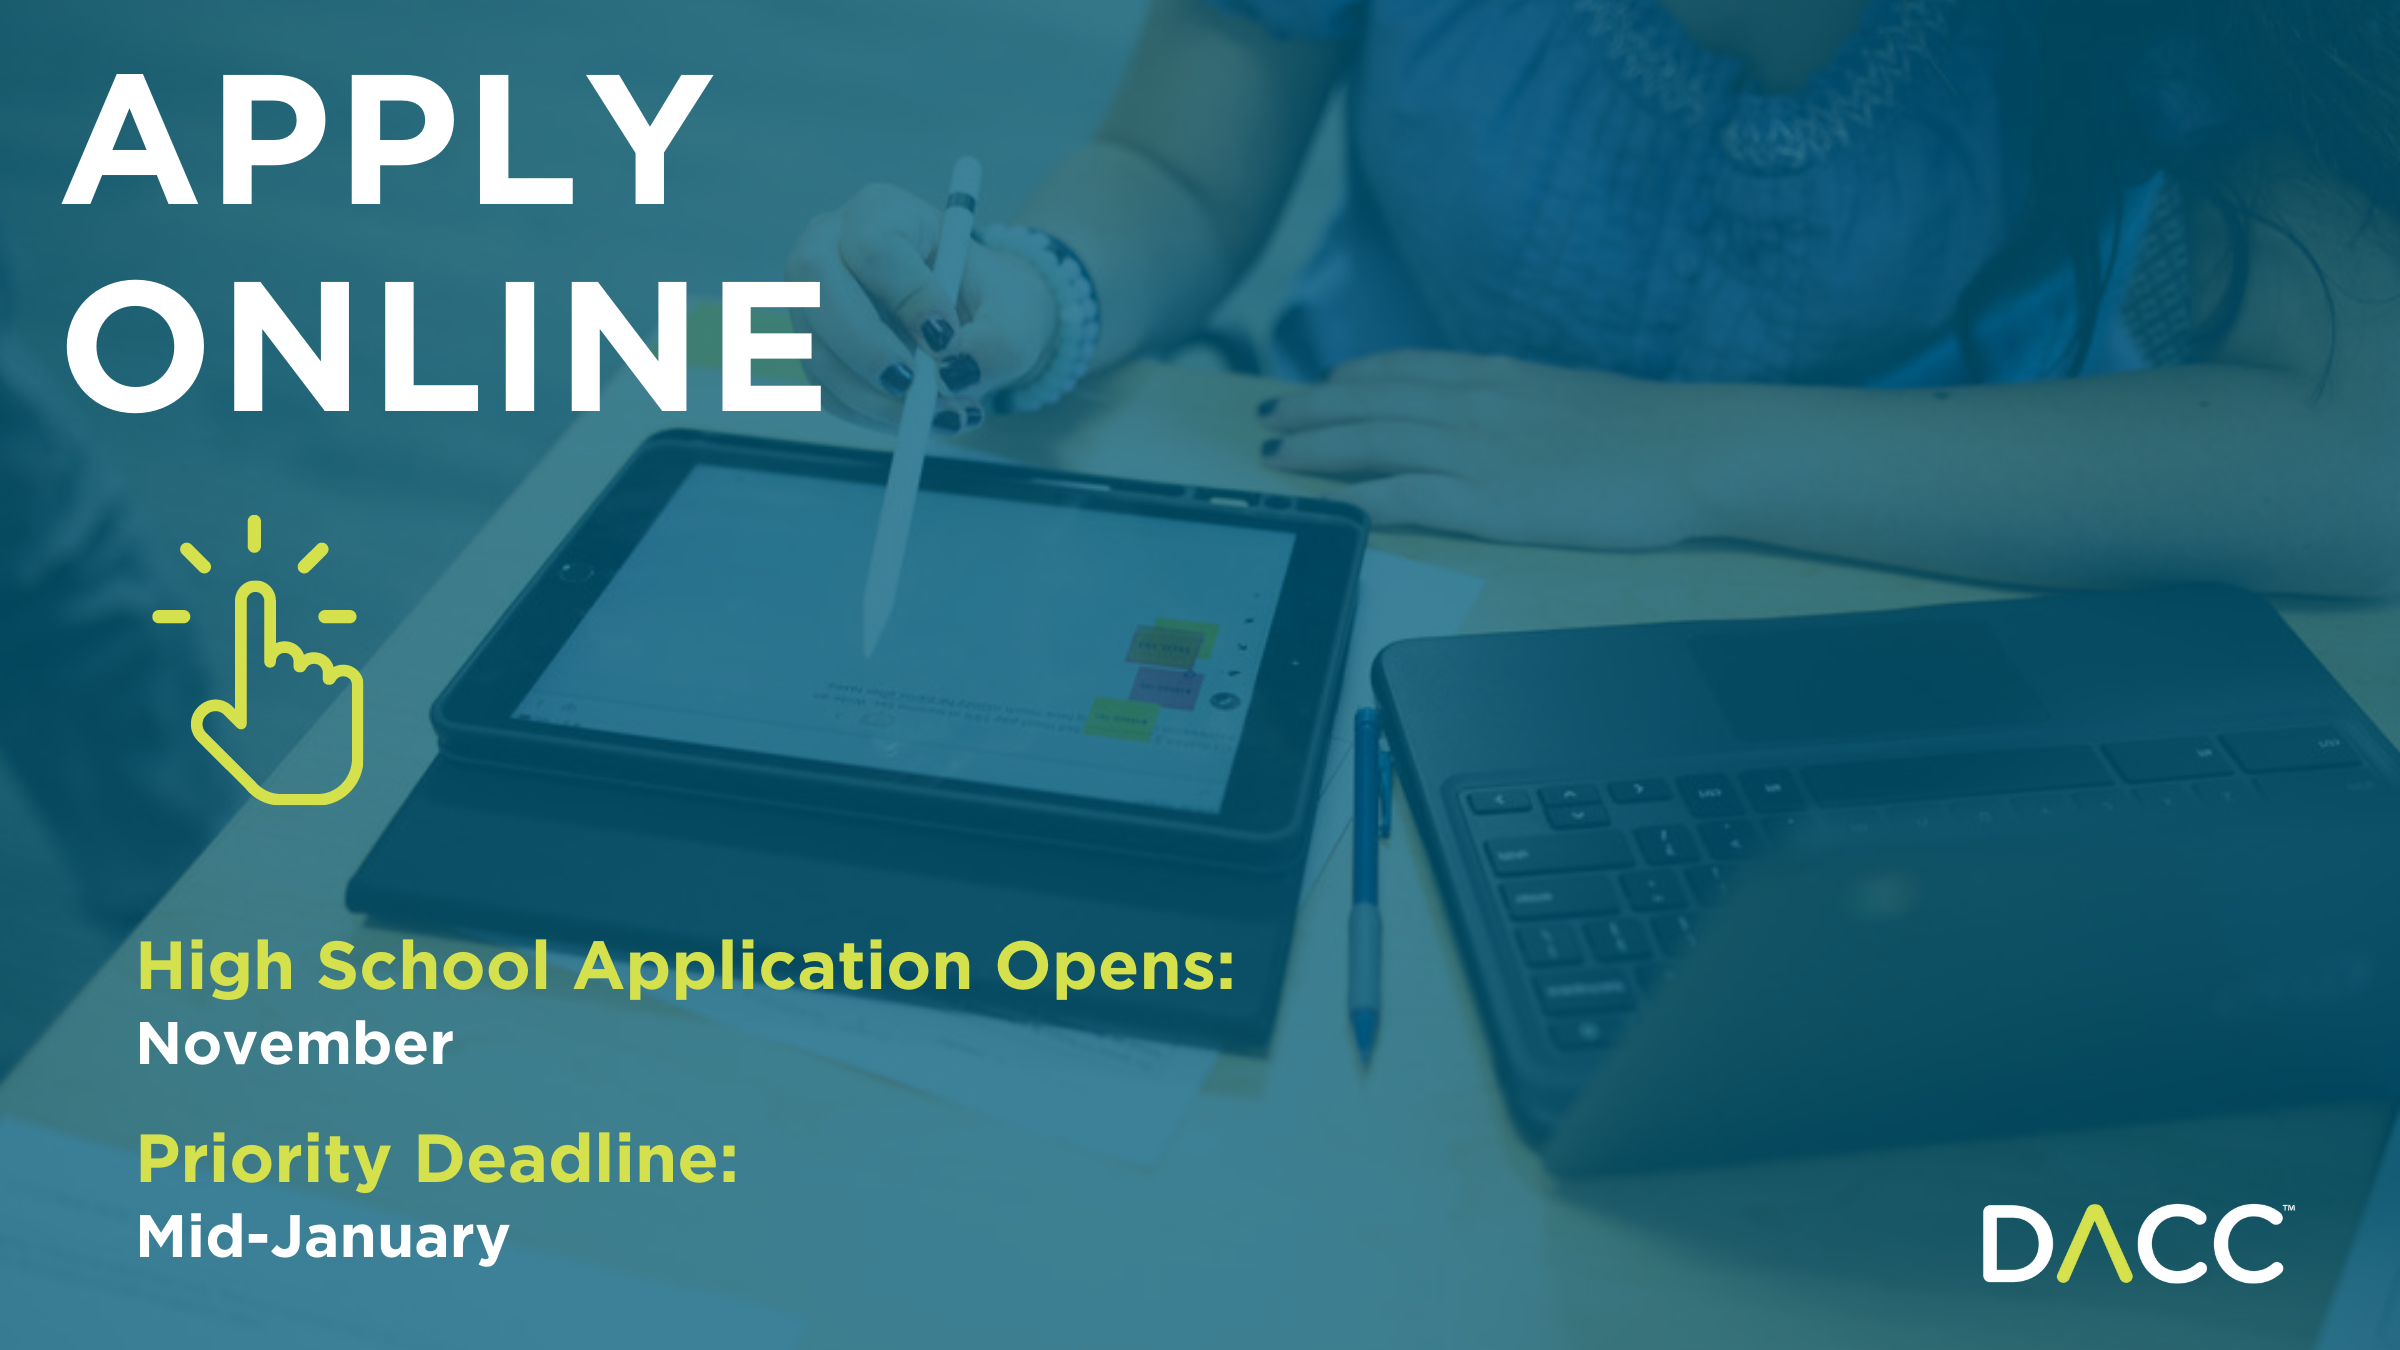 Apply Online. Application opens in November.